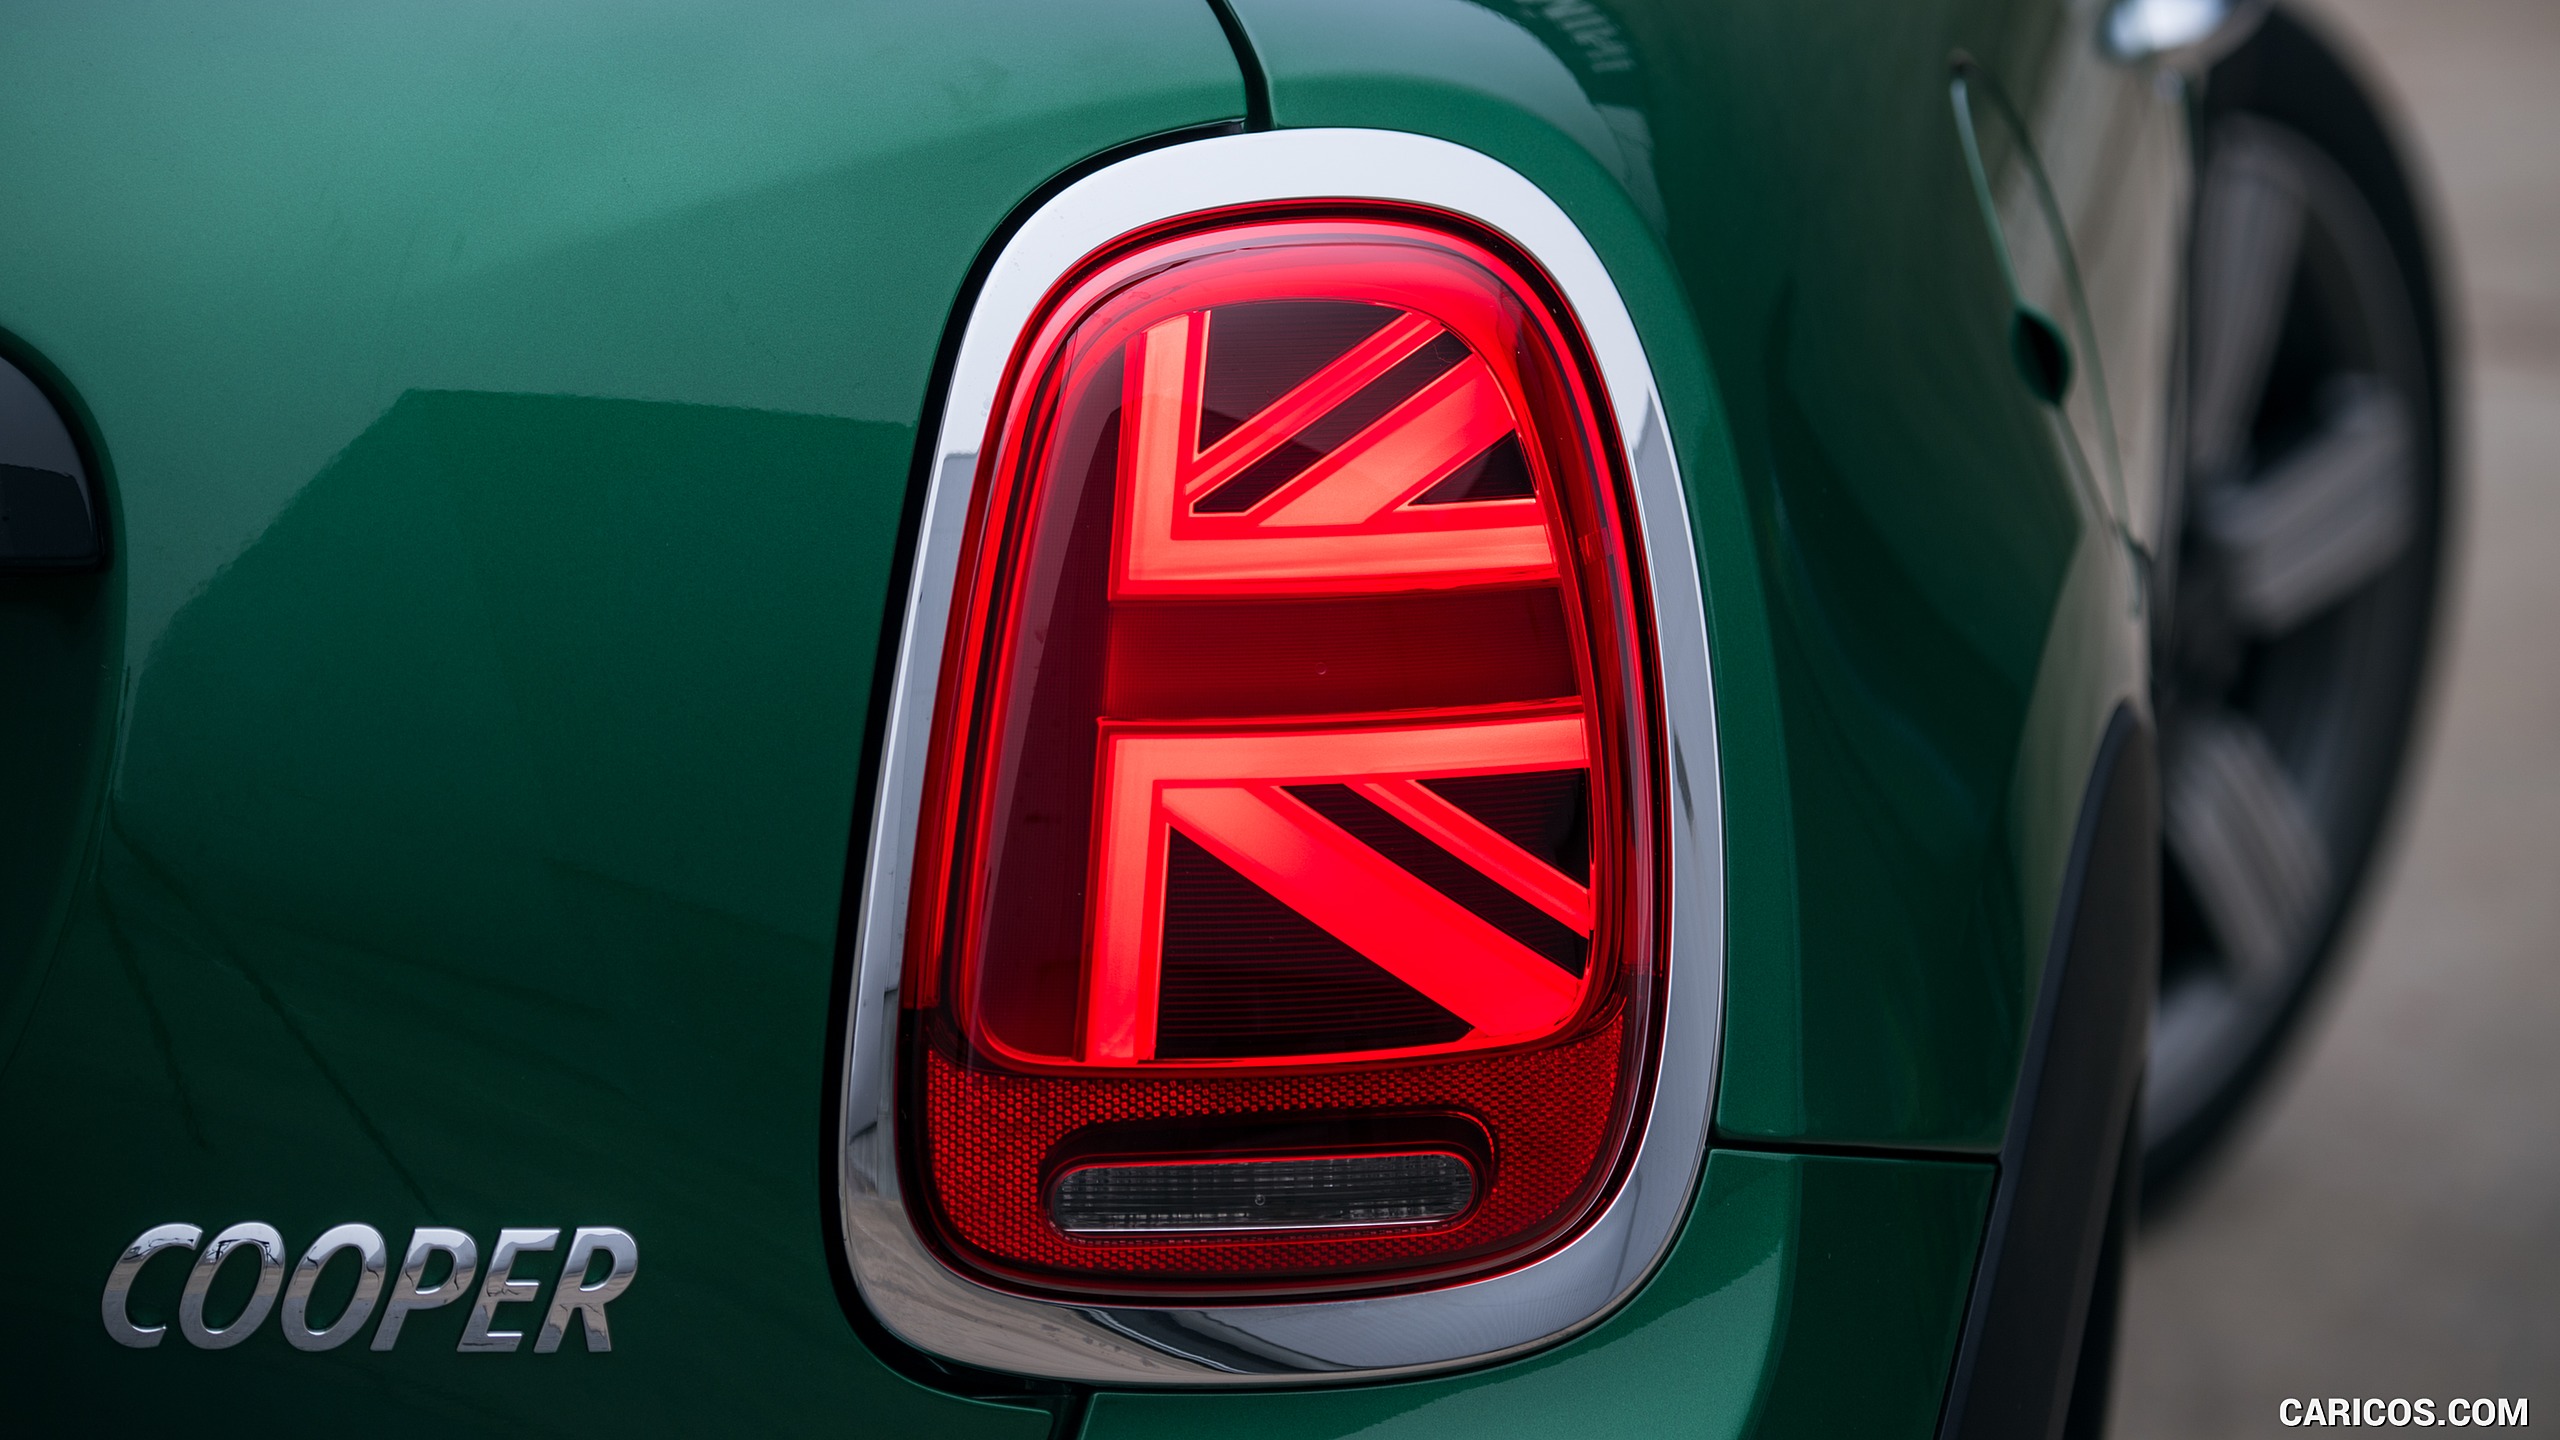 2019 MINI Cooper 3-Door 60 Years Edition - Tail Light, #66 of 102